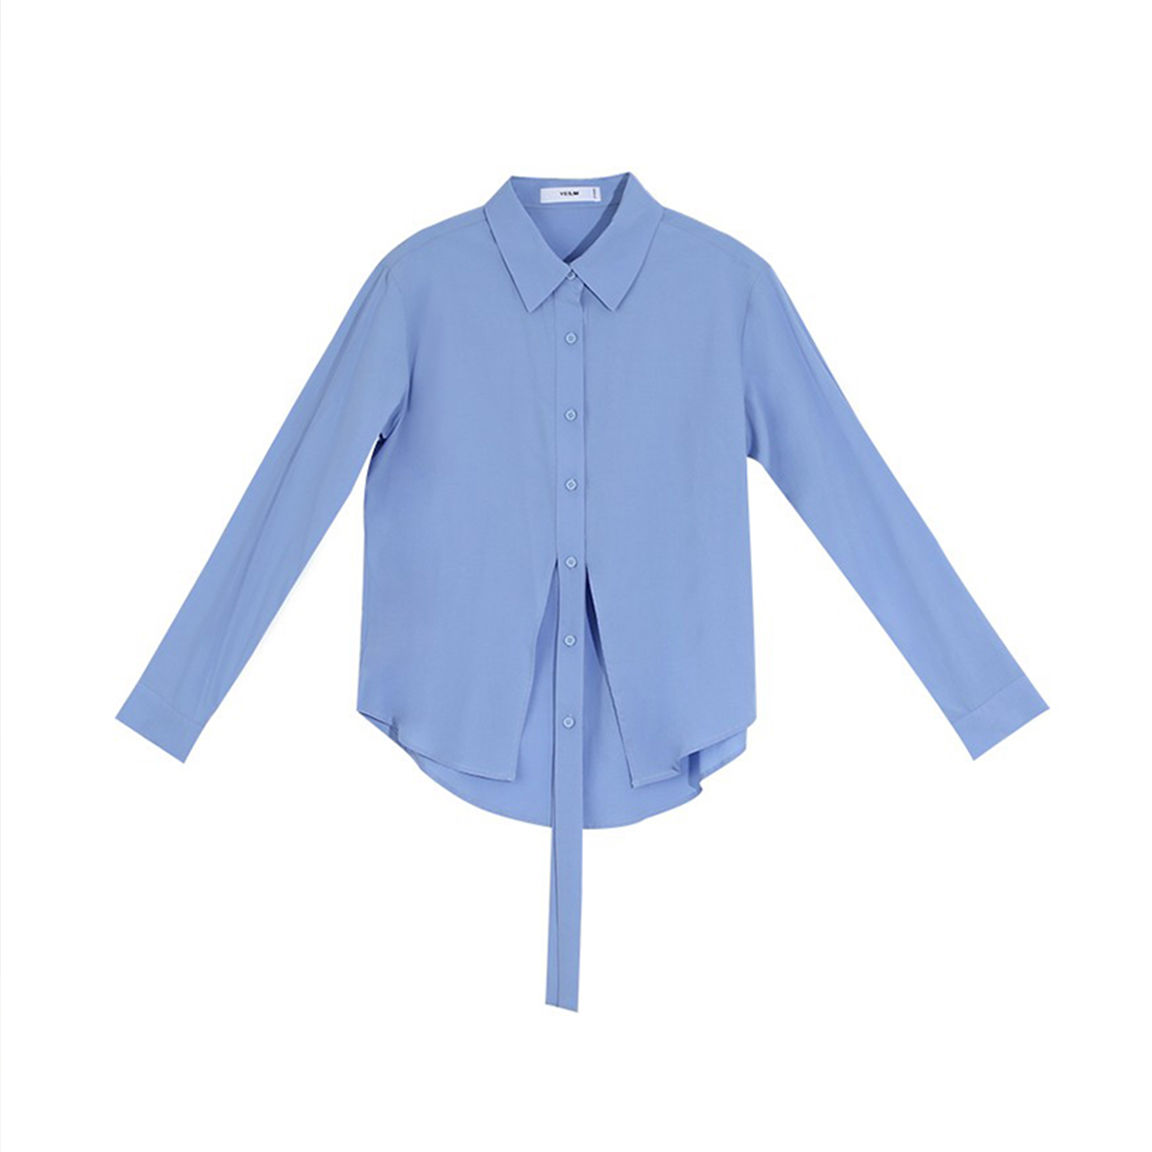 [Three-piece set] Design sense blue long-sleeved shirt female autumn Korean version bf lazy wind thin top skirt